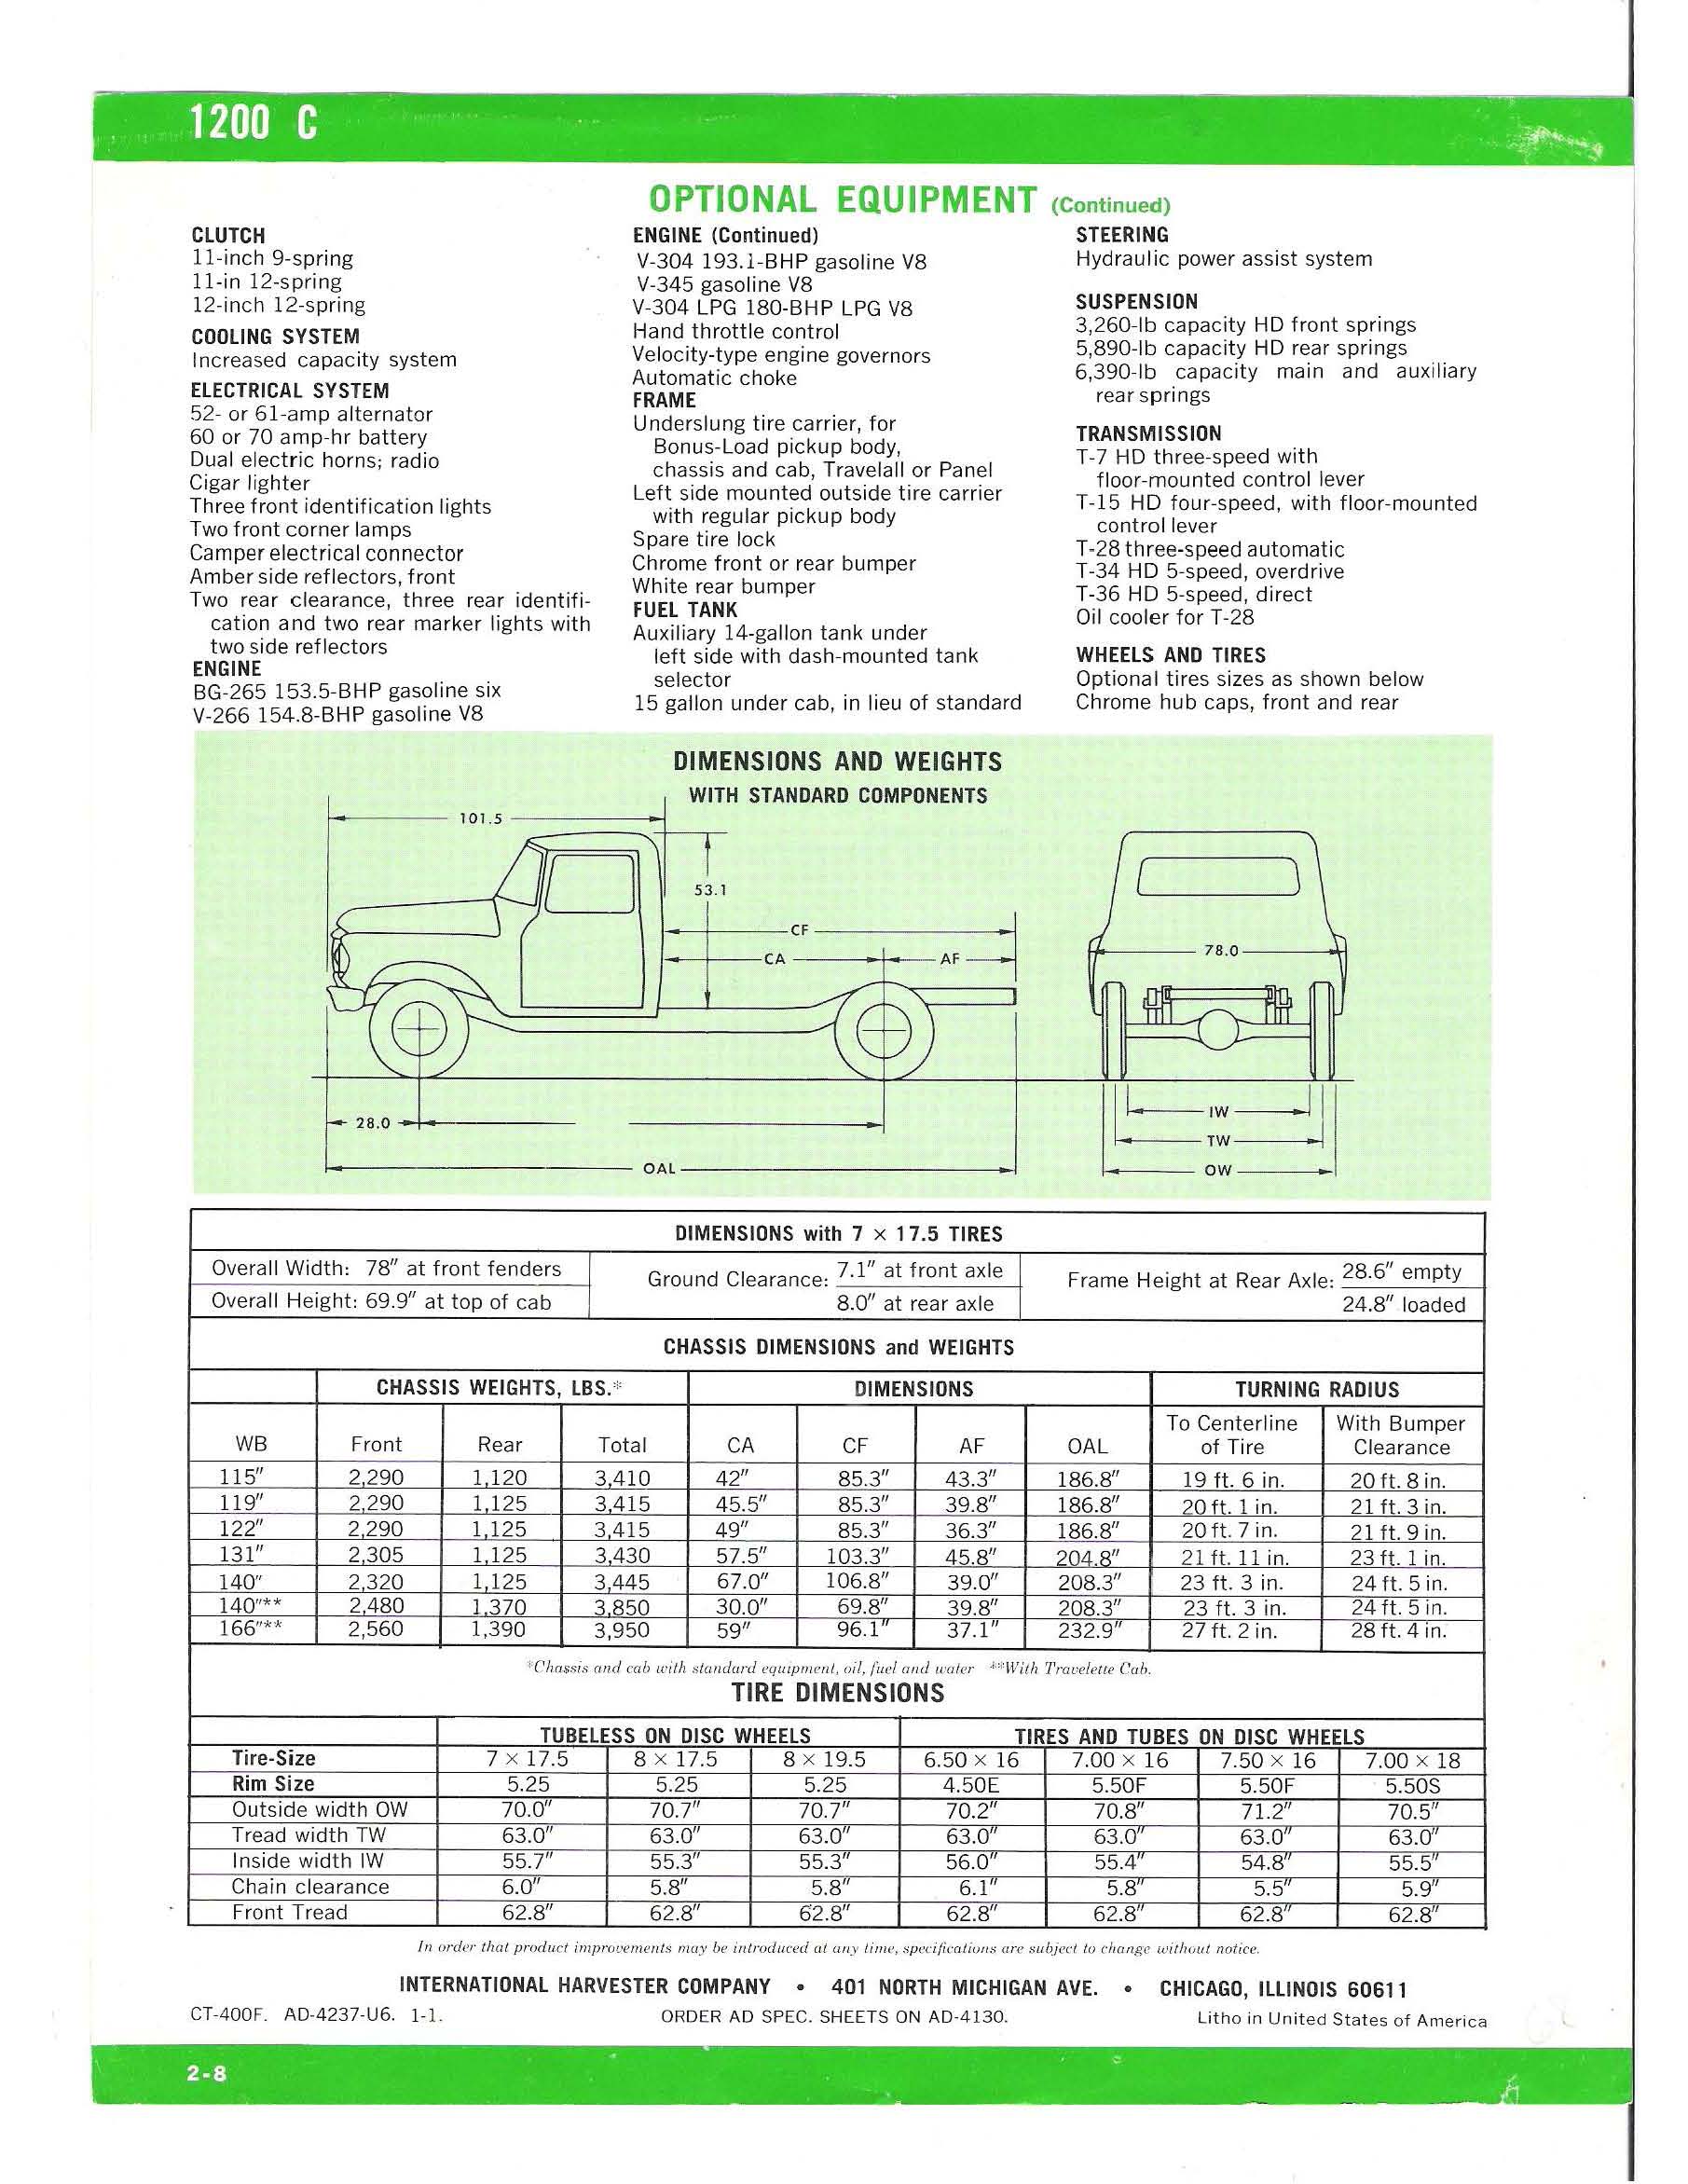 1968 International 1200C Folder Page 1